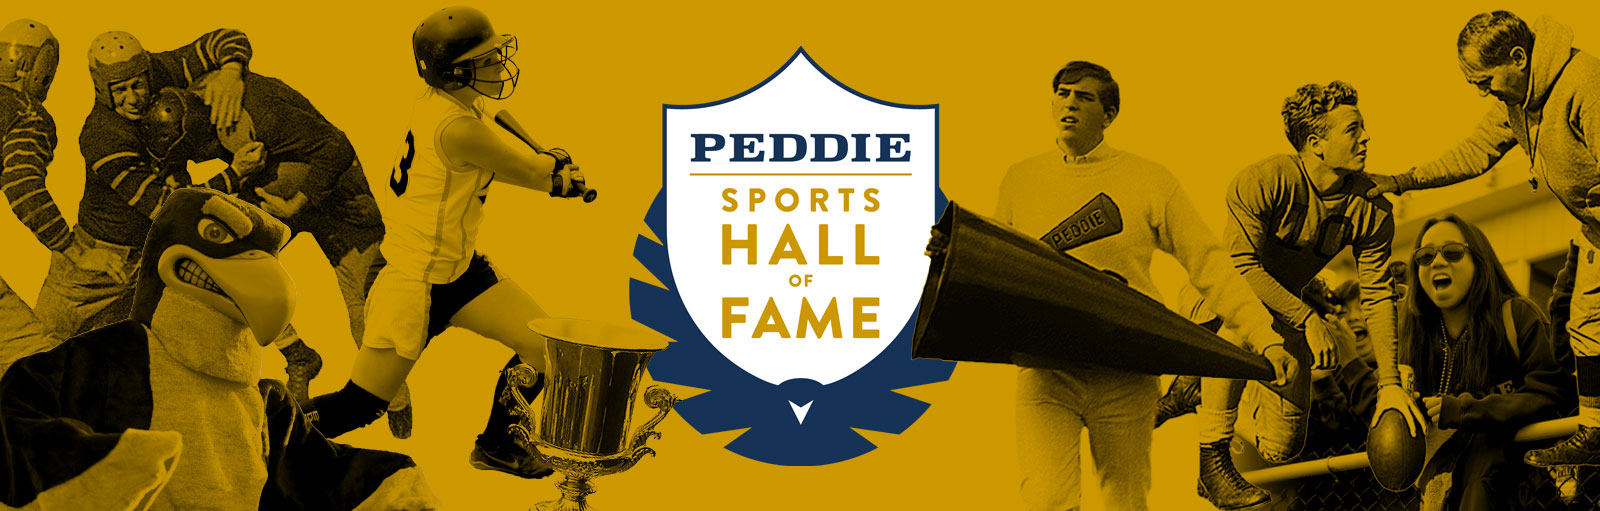 Peddie Sports Hall of Fame Banner Image